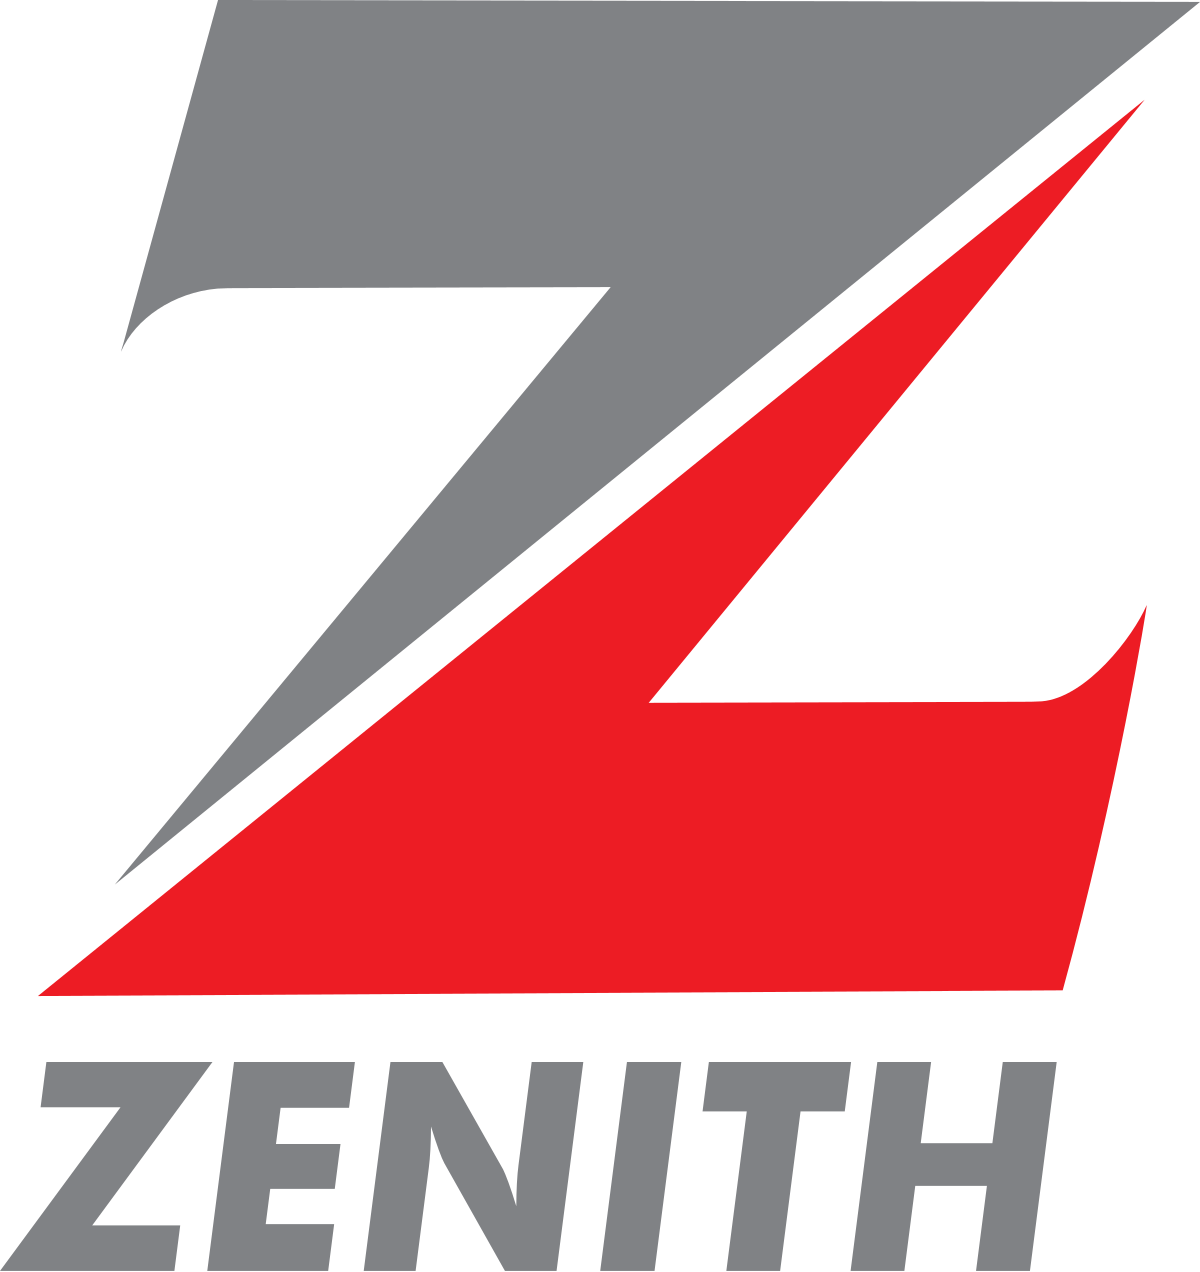 Zenith Bank : Brand Short Description Type Here.